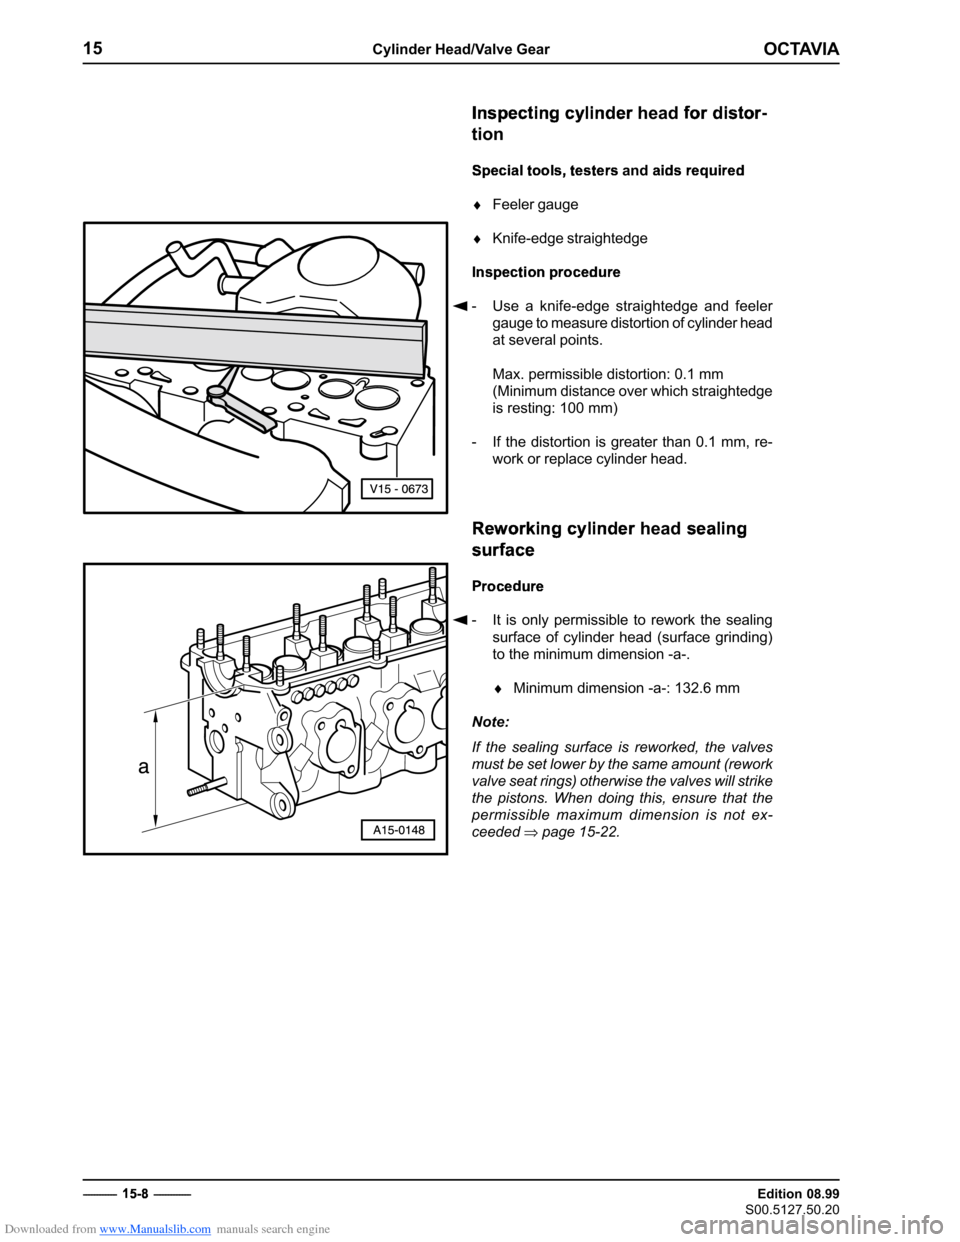 SKODA OCTAVIA 2000 1.G / (1U) 2.0 85kw Engine Repair Manual Downloaded from www.Manualslib.com manuals search engine �������
��������������������������
�������������
��������������
���������������

� �������������
 
 	


	

 
�����
 

